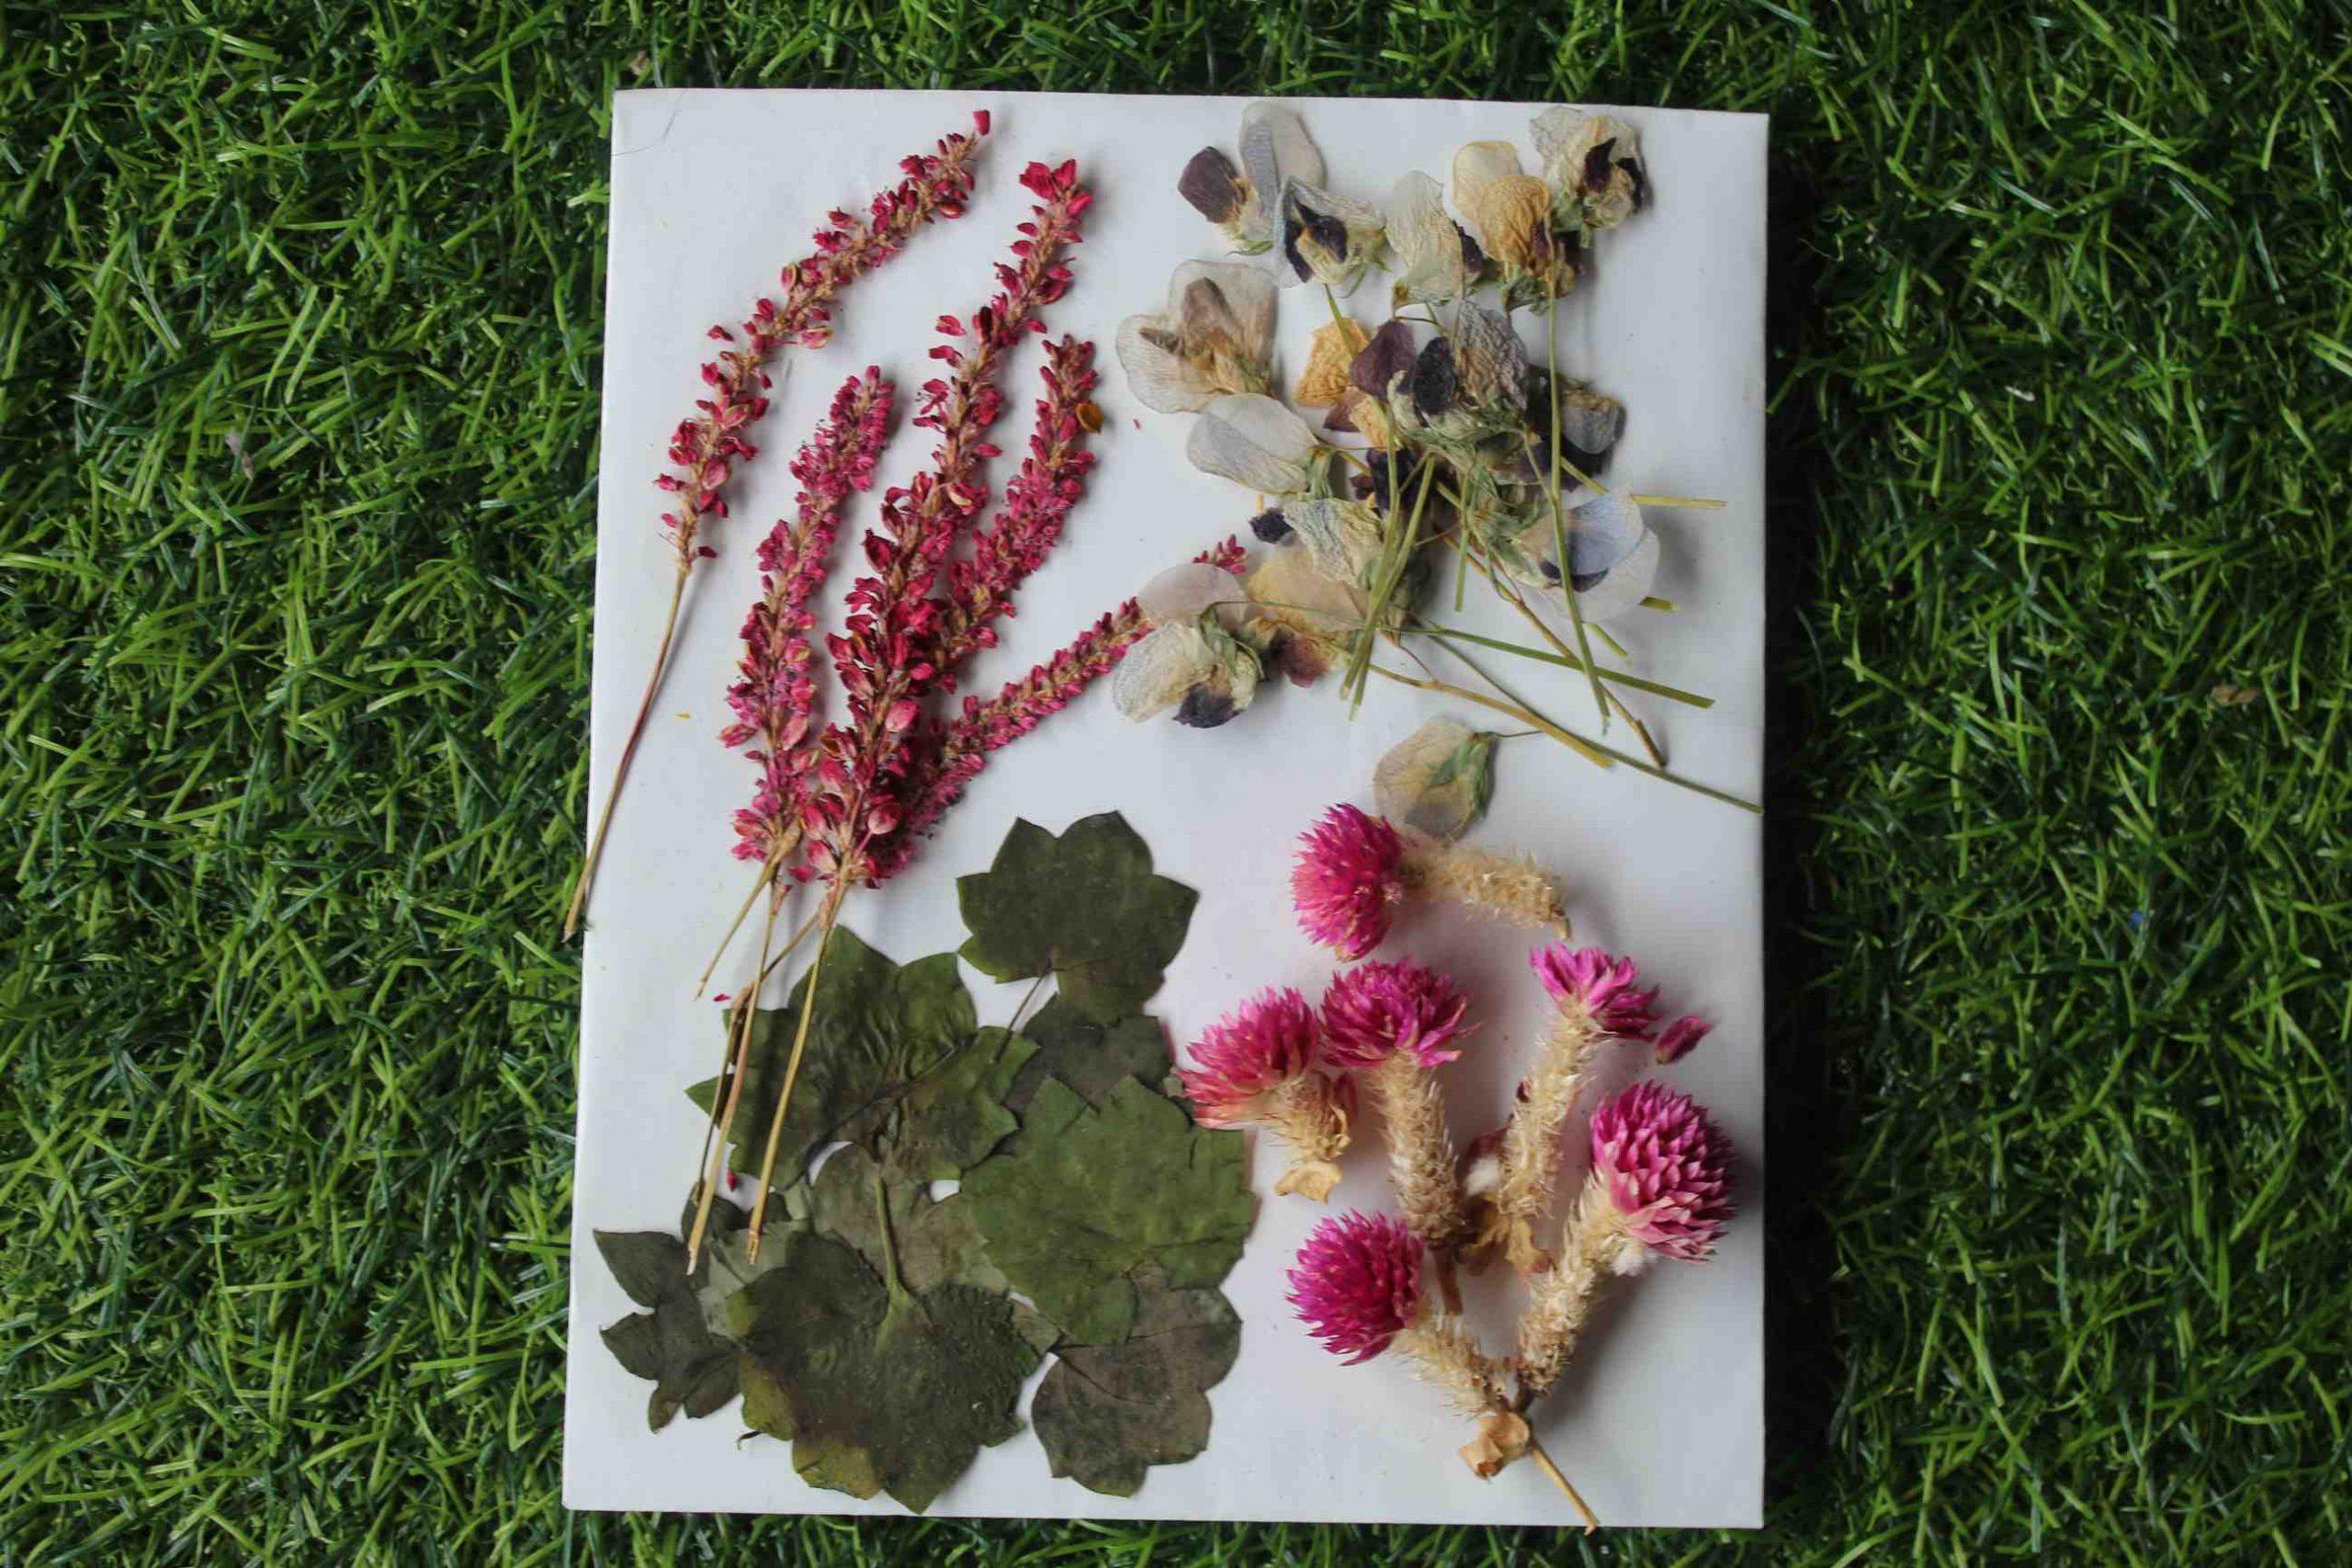 Buy Dried Calendula flowers - BloomyBliss online flower shop